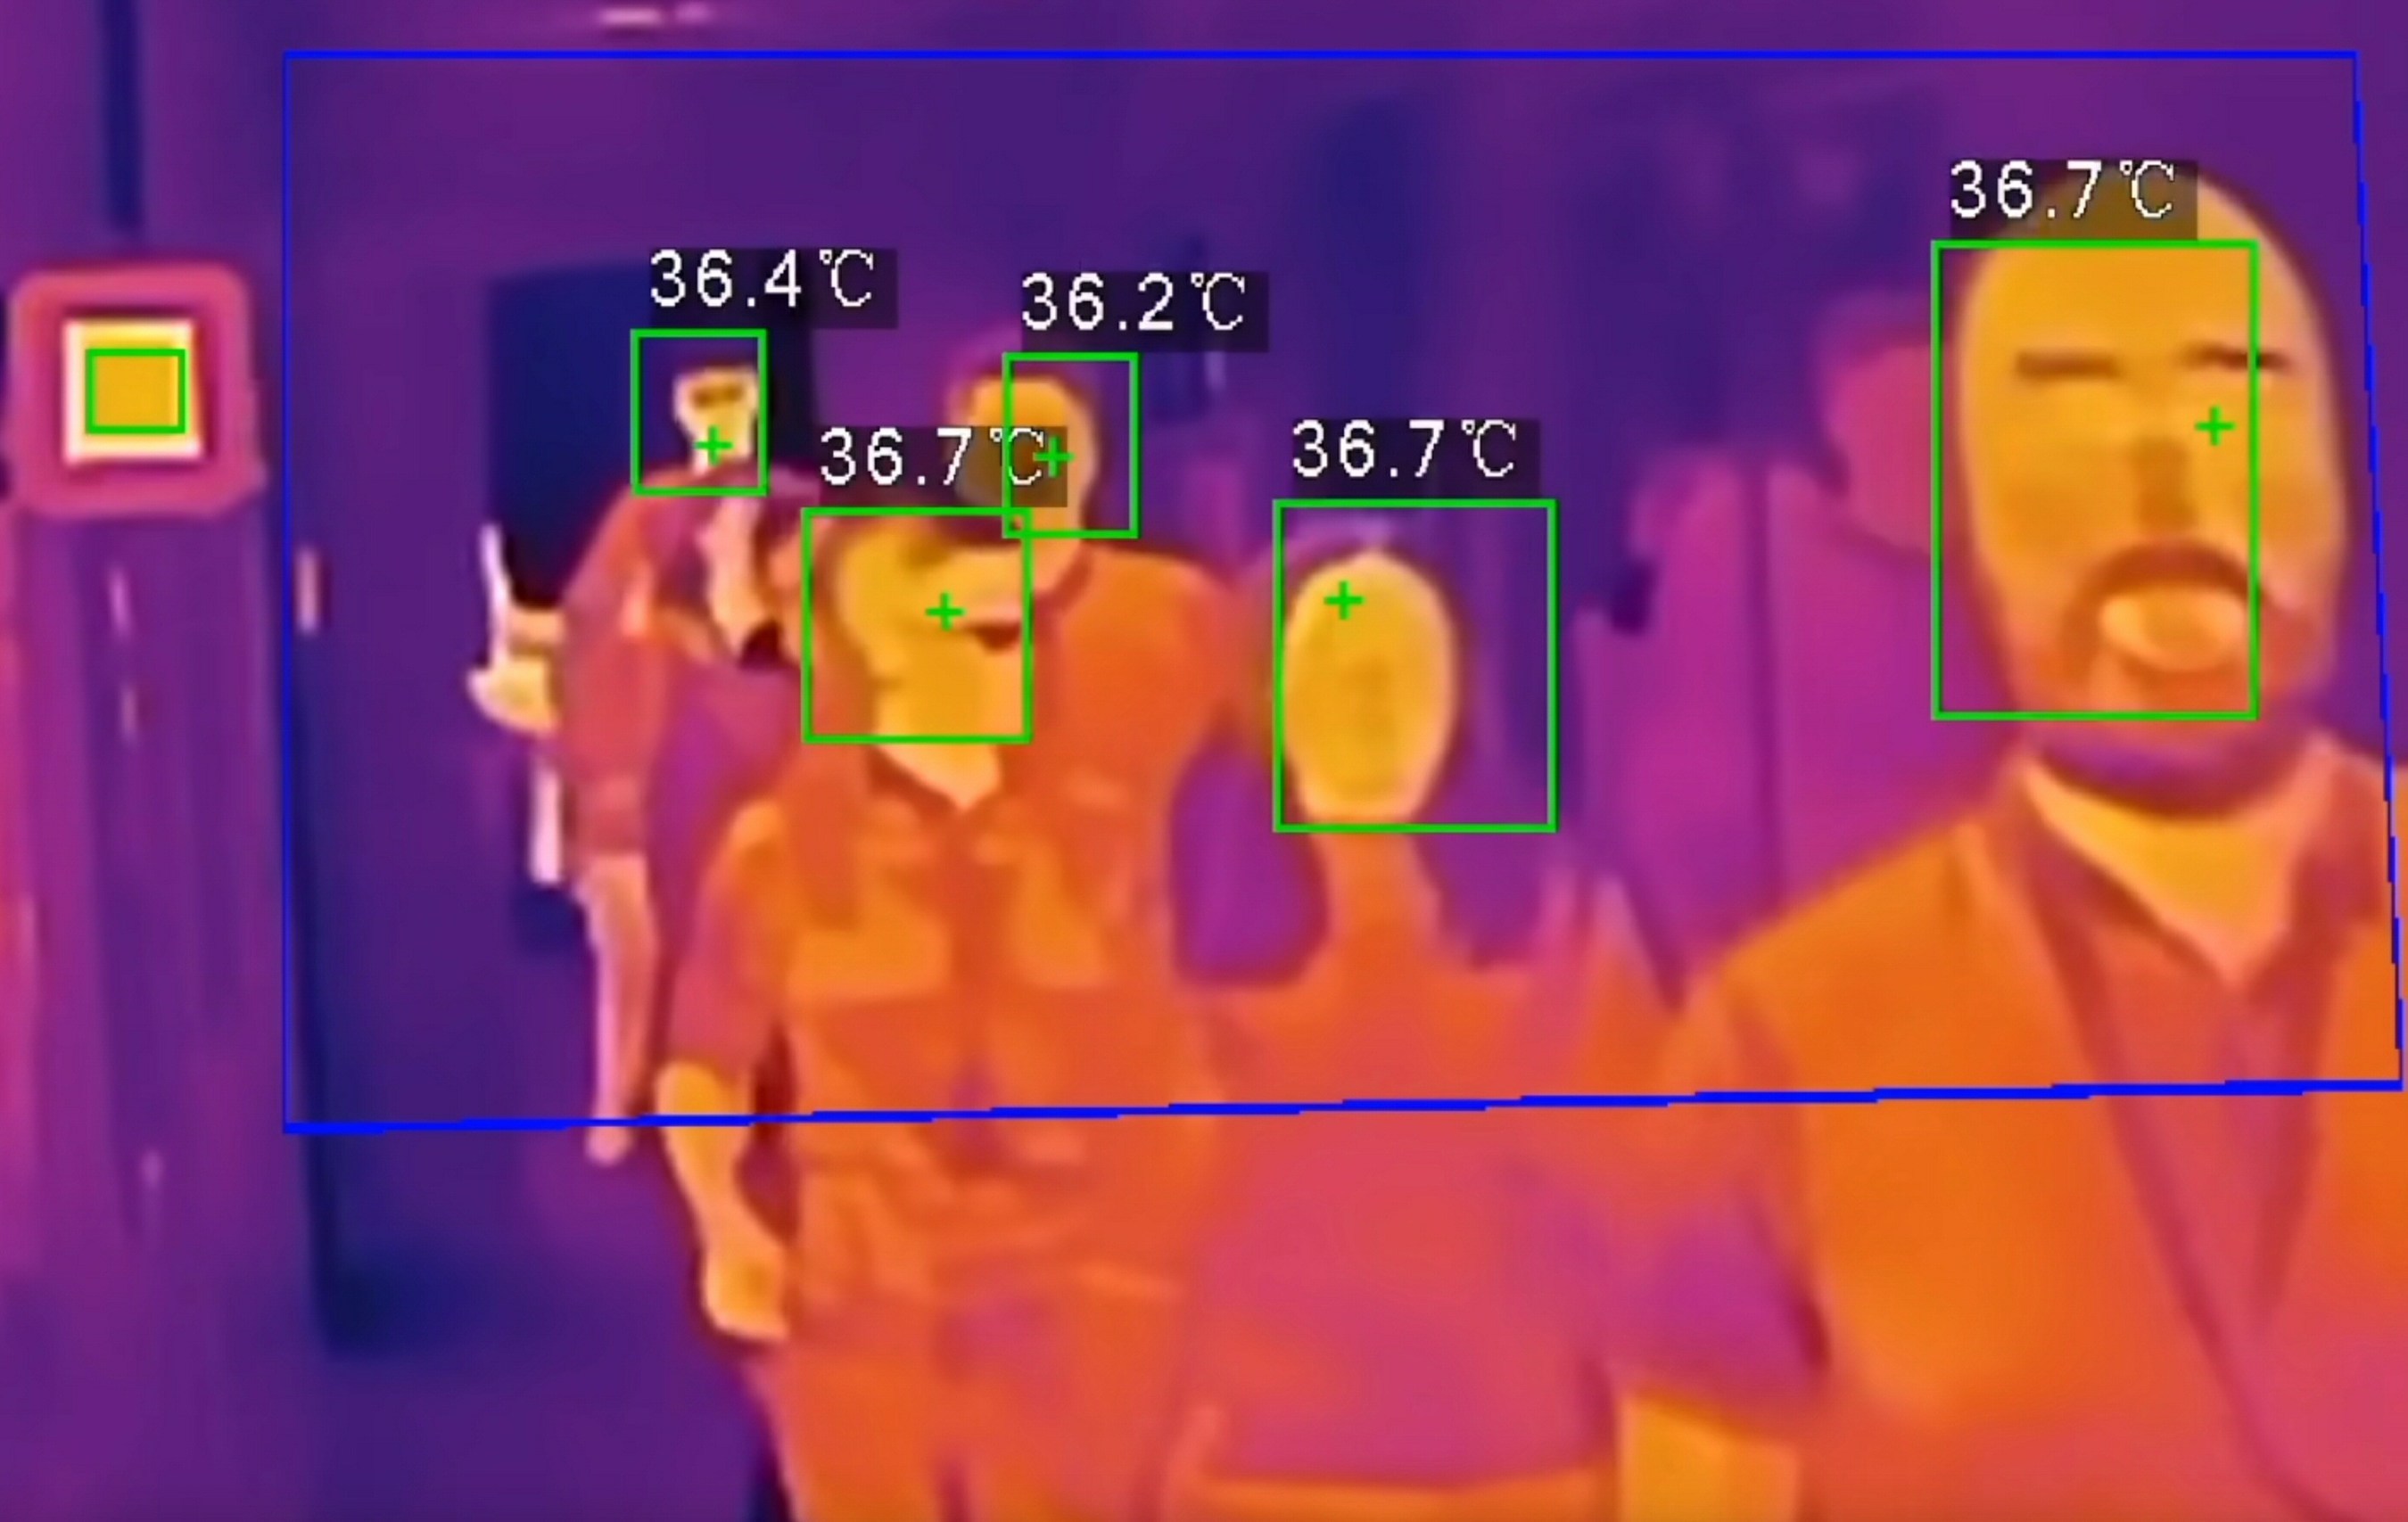 Platinum Cctv Releases New Thermal Body Temperature Camera